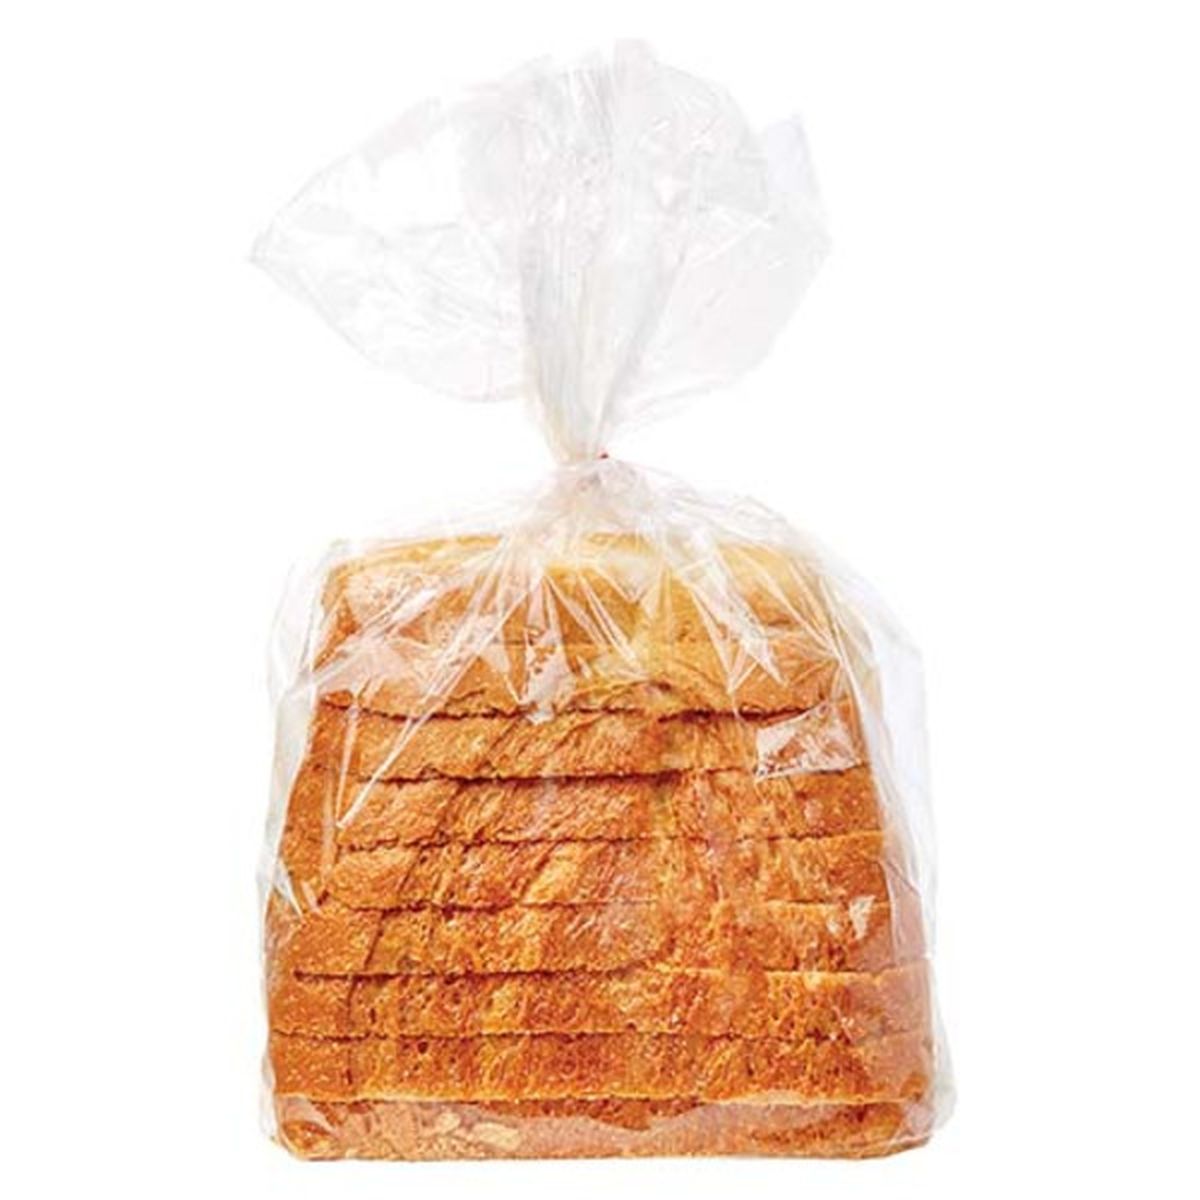 Calories in Wegmans Farmstyle Bread Half Loaf